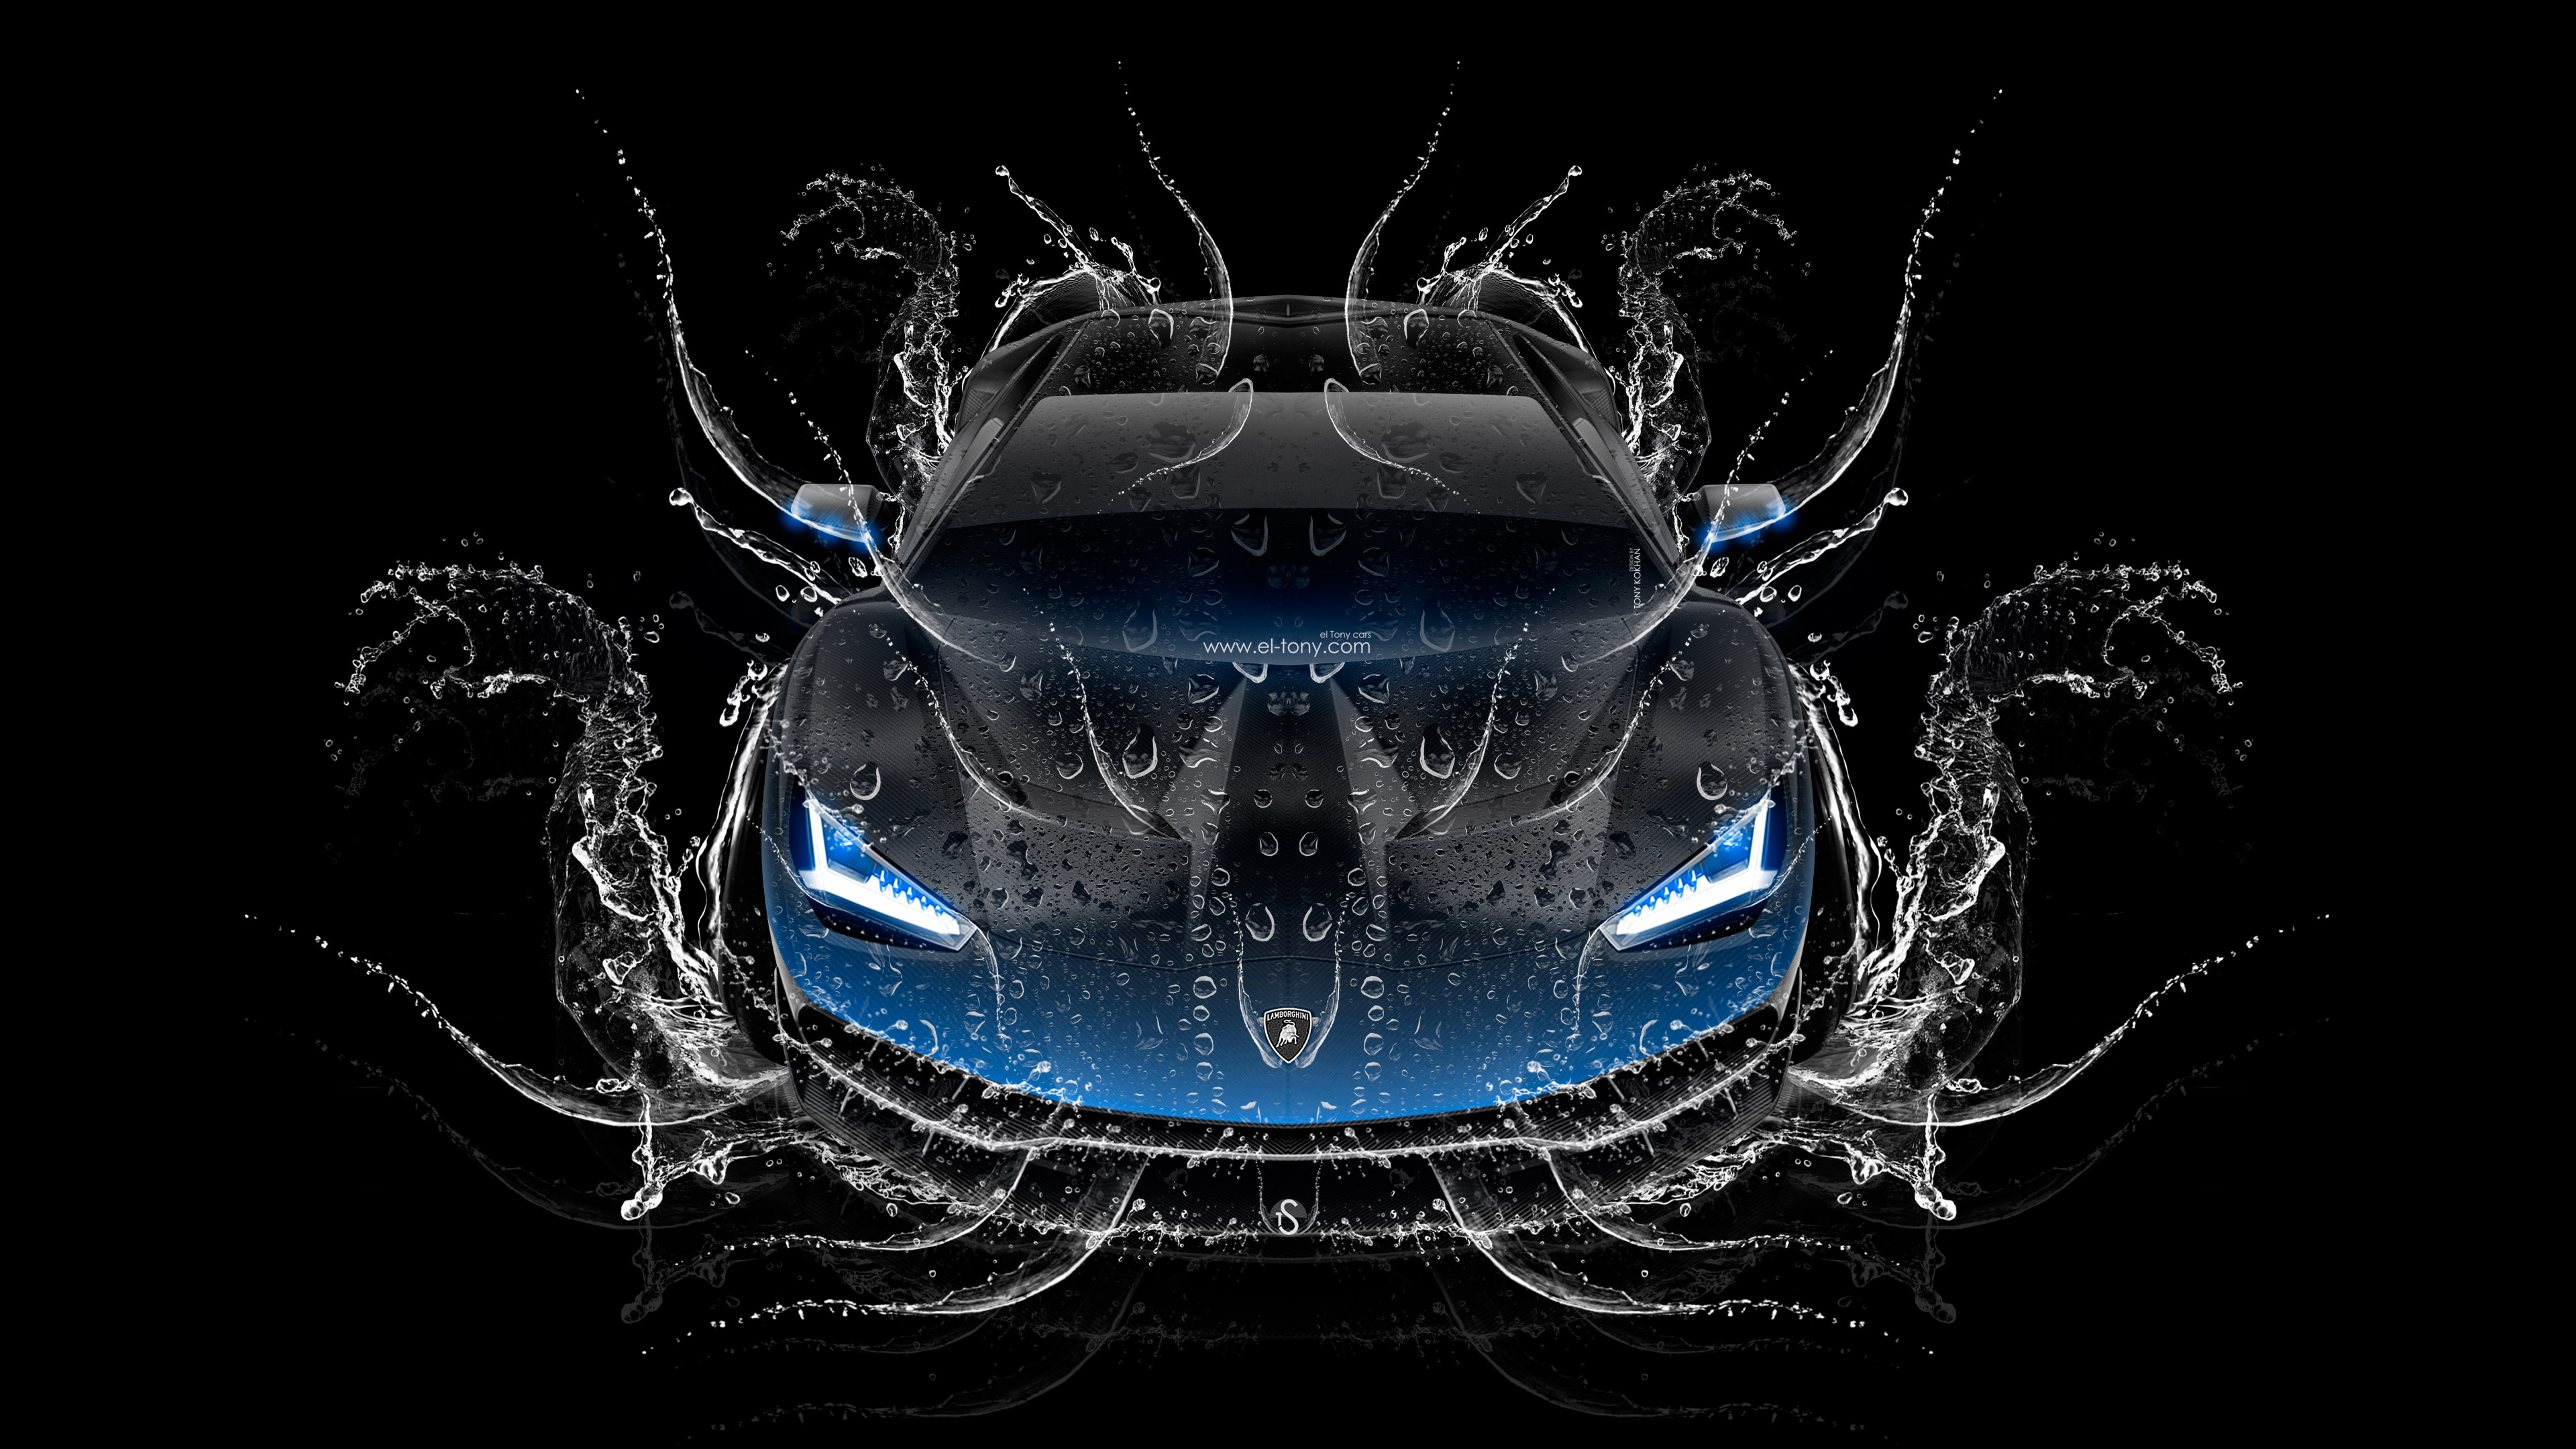 Lamborghini Centenario FrontUp Super Water Car 2016